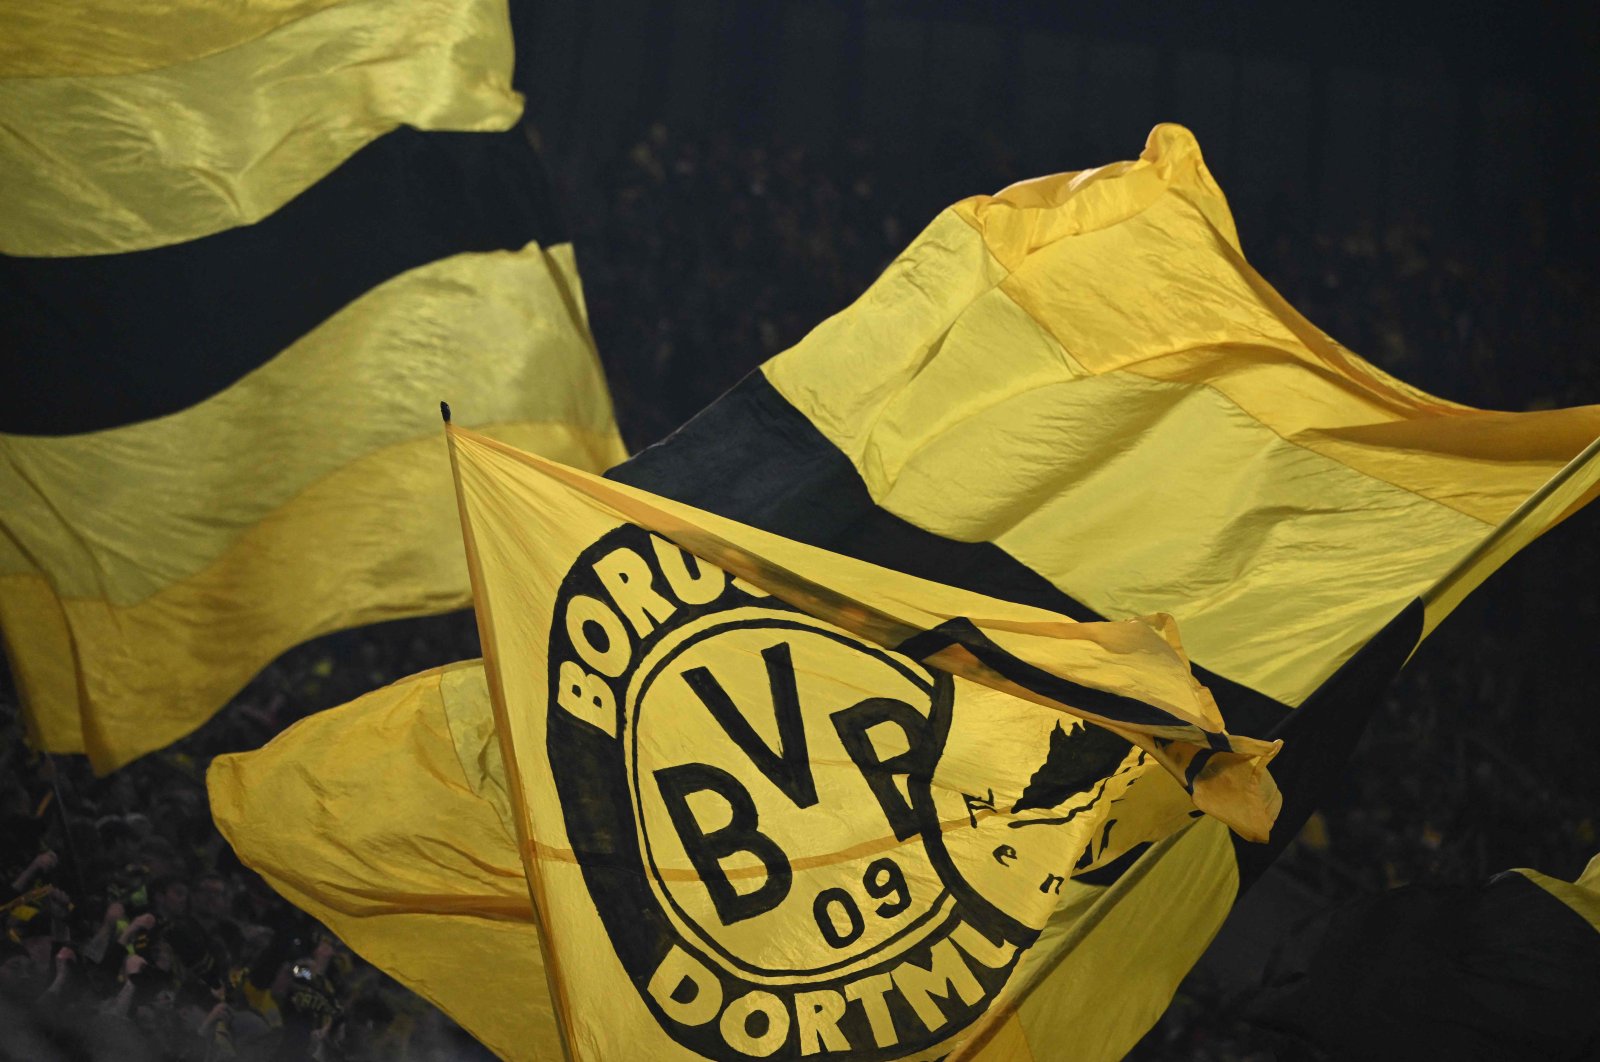 Dortmund mengklaim pemain muda dilecehkan secara rasial di pertandingan Sevilla